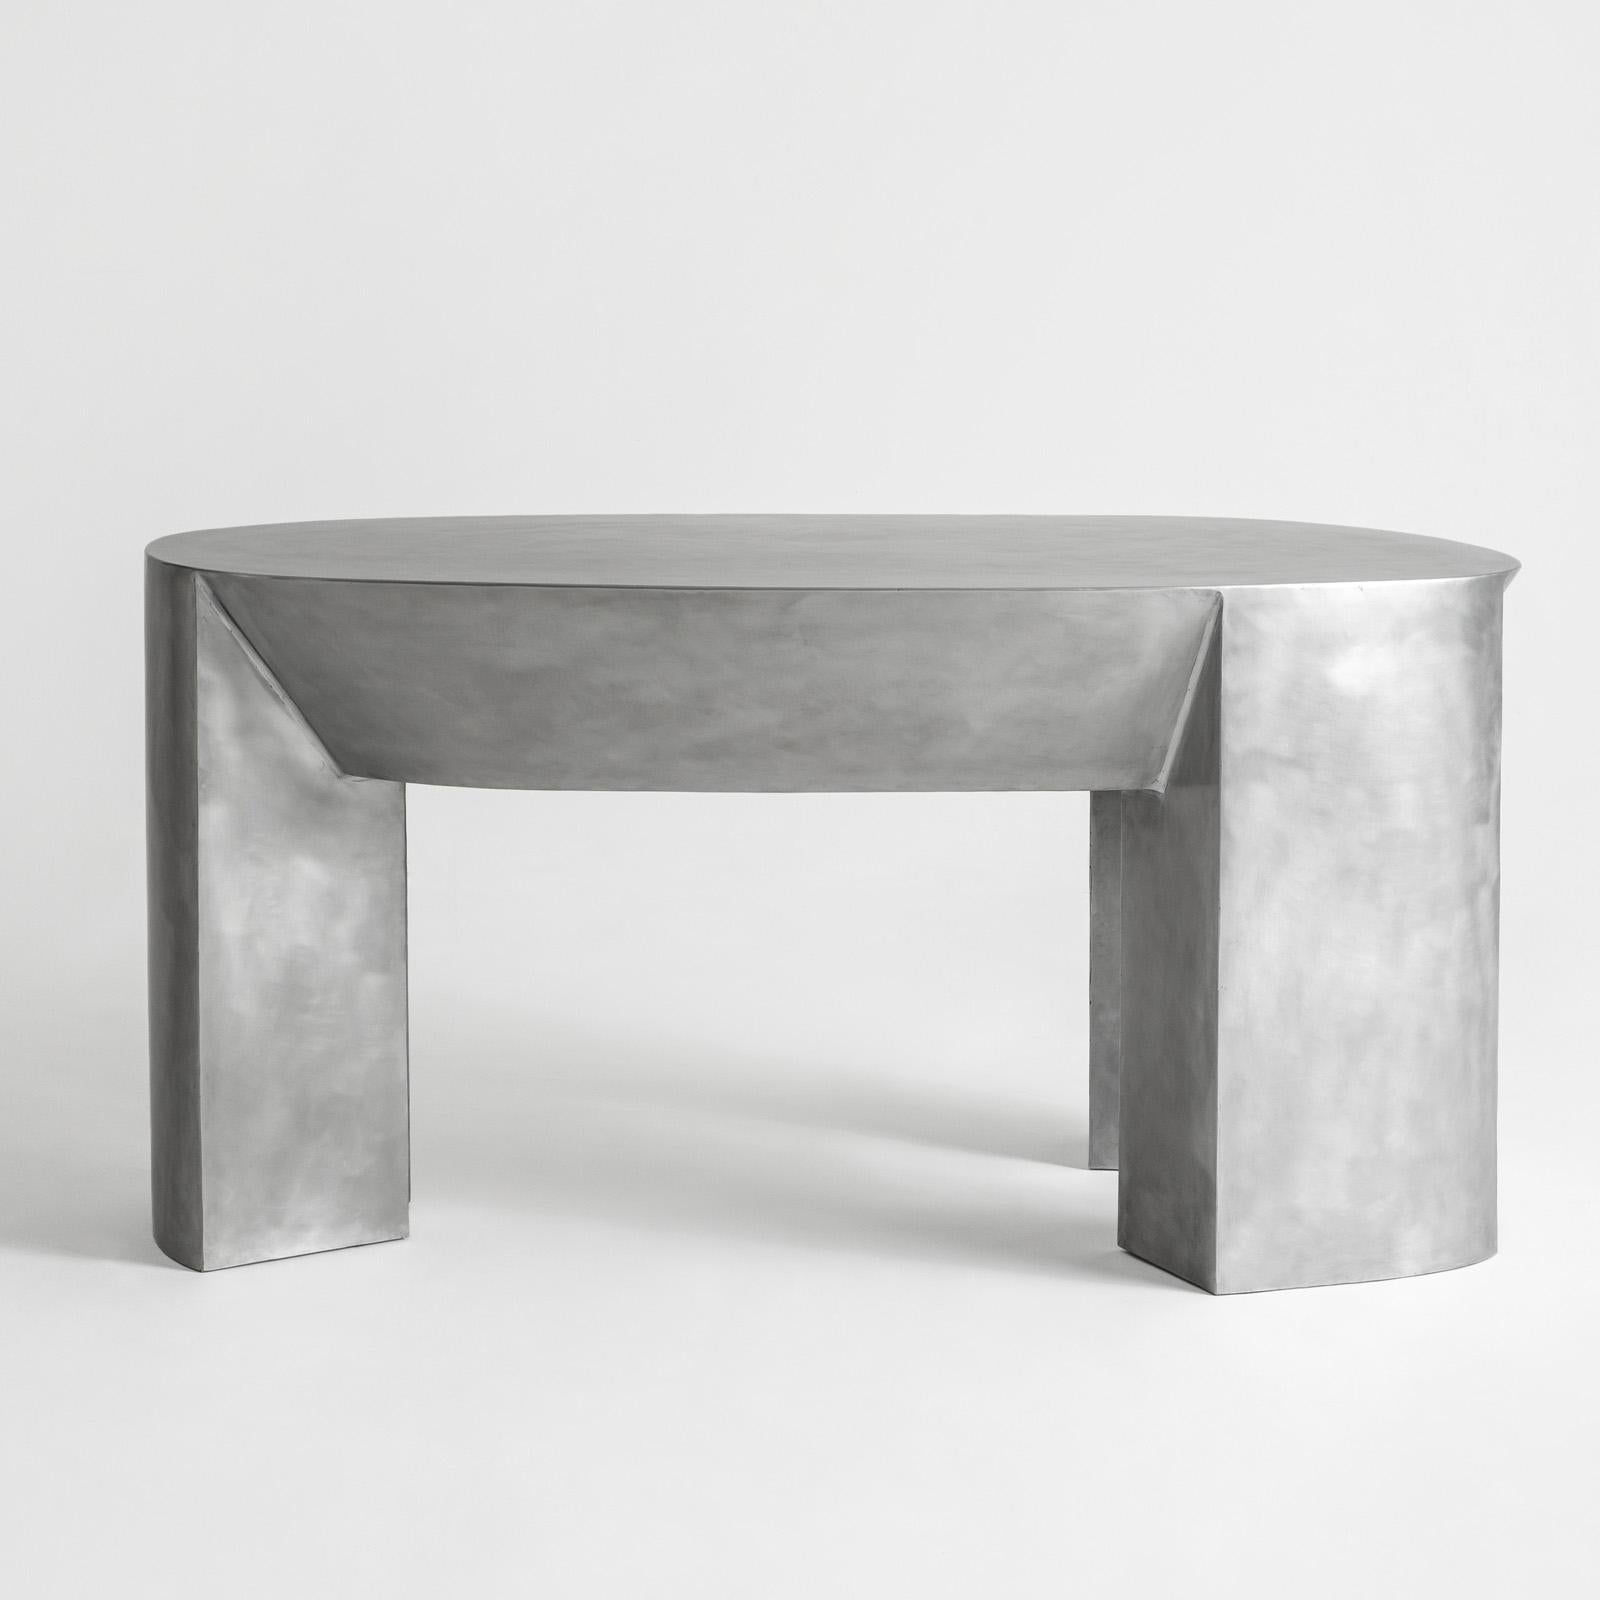 Polish Aluminium Table by Jan Ankiersztajn  For Sale